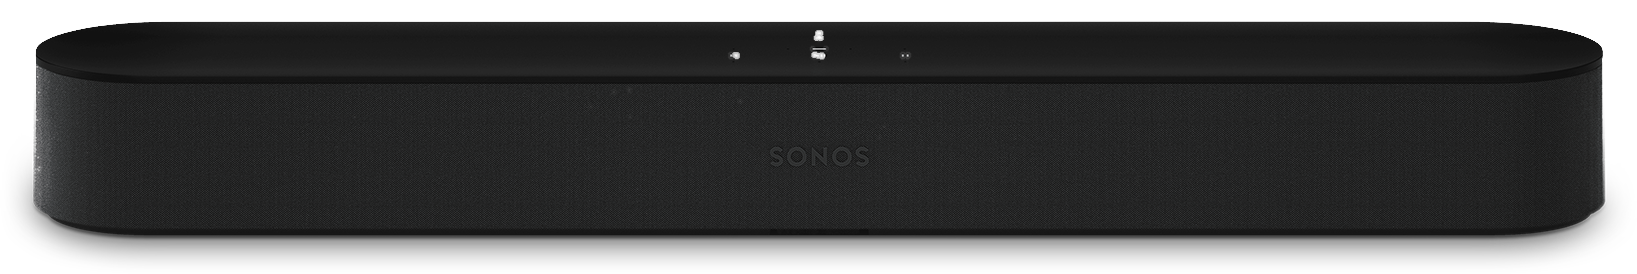 Sonos Beam スピーカー(Sonos)格安セール一覧